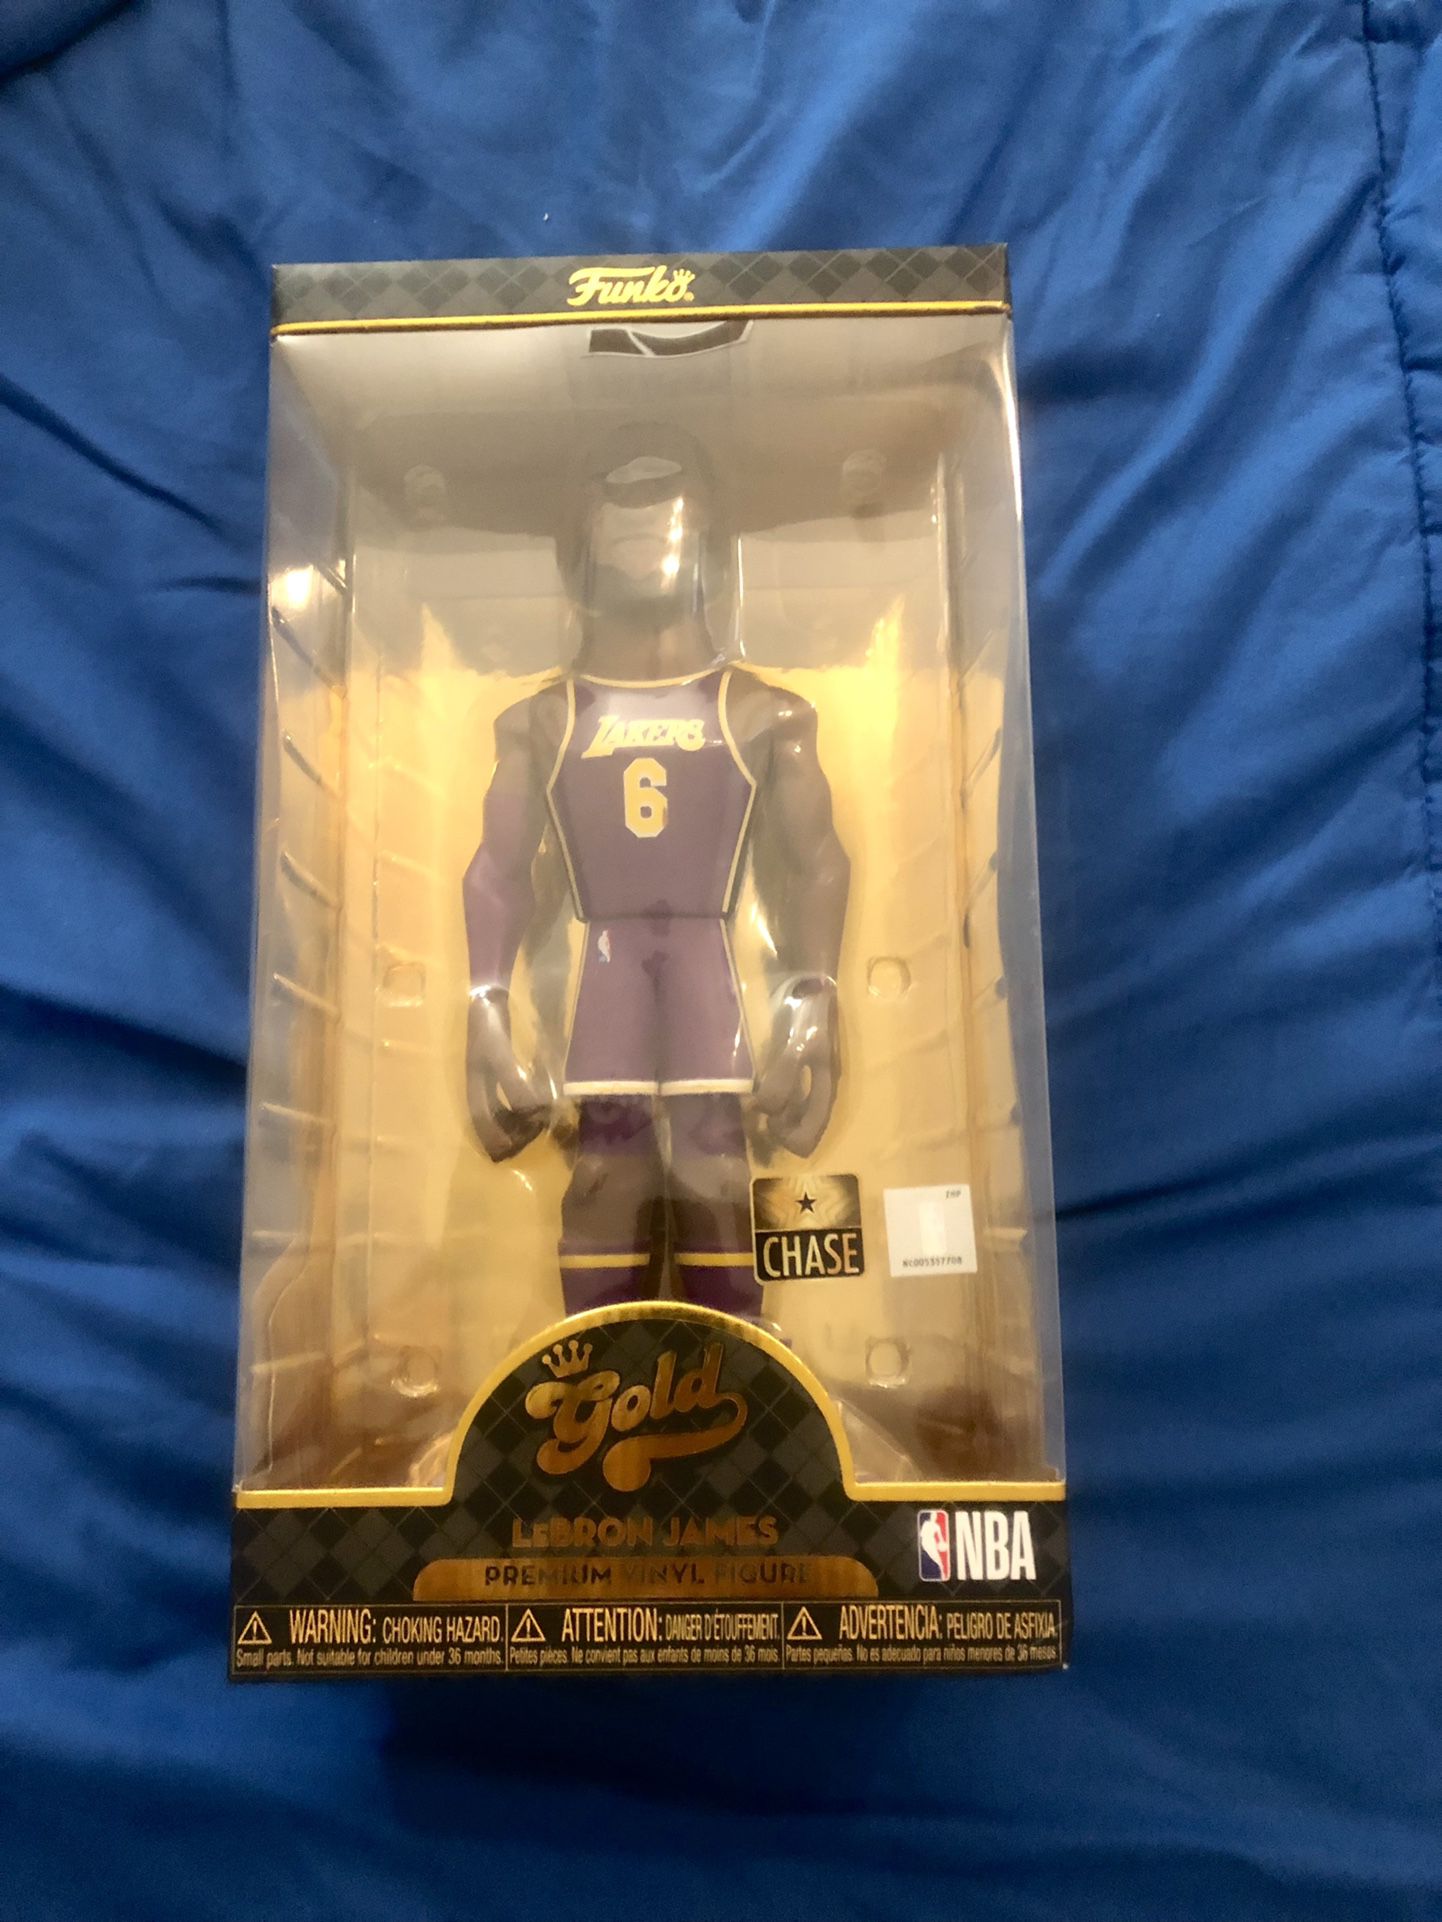 NBA - Lebron James Lakers (Purple Jersey) 5 GOLD Premium Vinyl